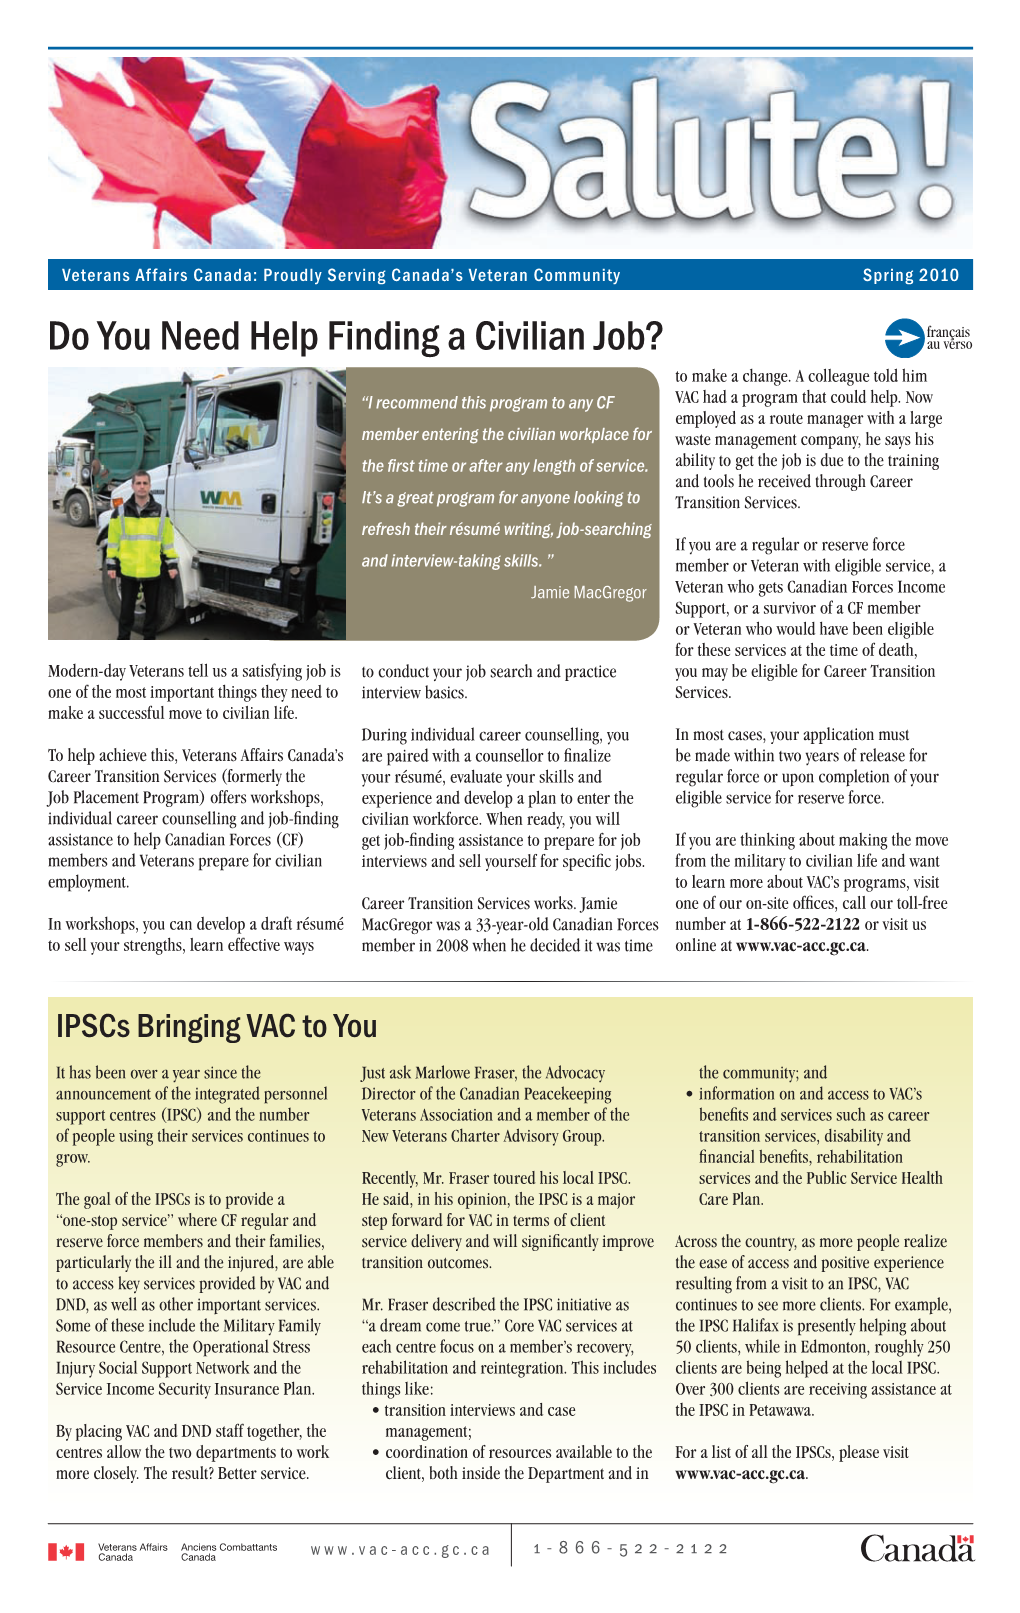 Do You Need Help Finding a Civilian Job? to Make a Change